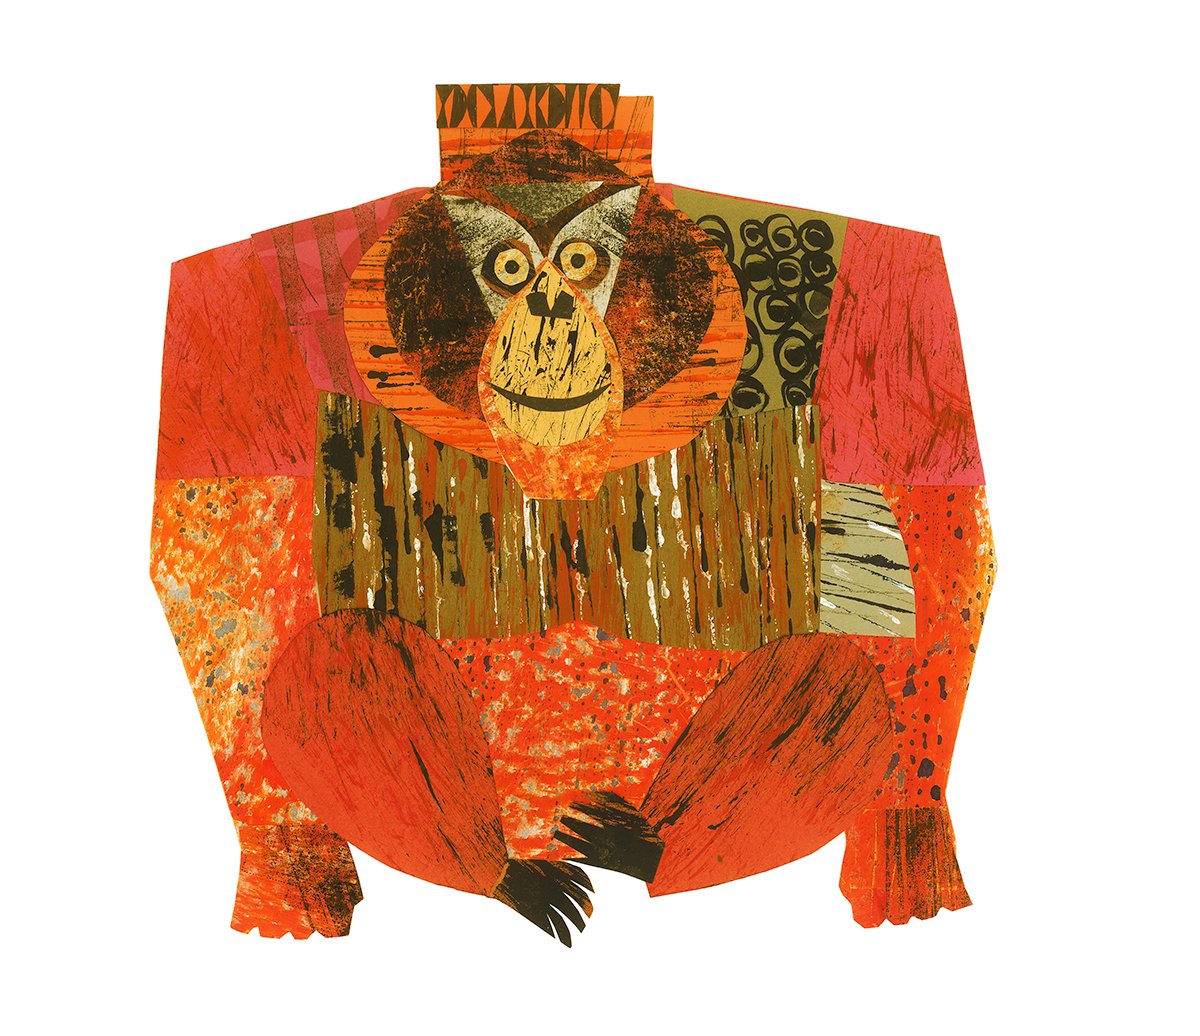 clare-youngs-patchwork-orangutan.jpg